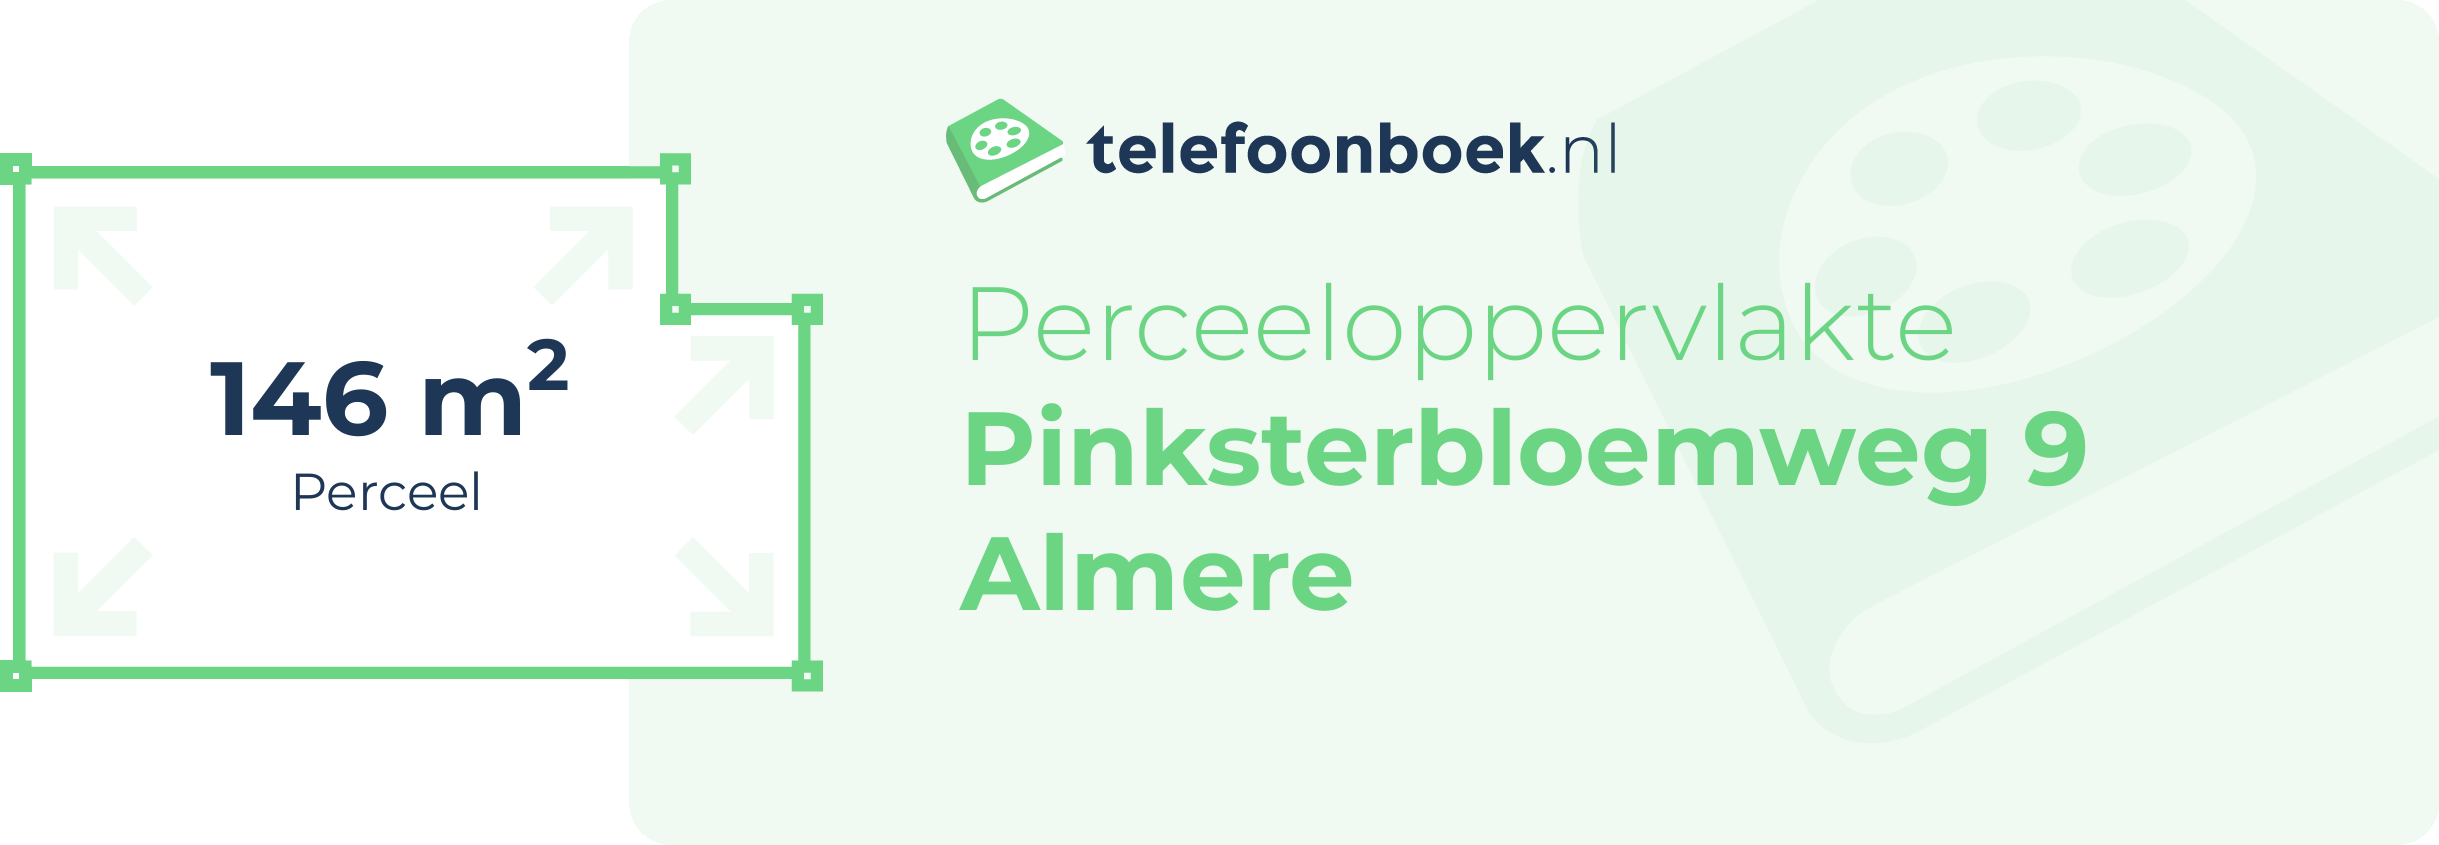 Perceeloppervlakte Pinksterbloemweg 9 Almere